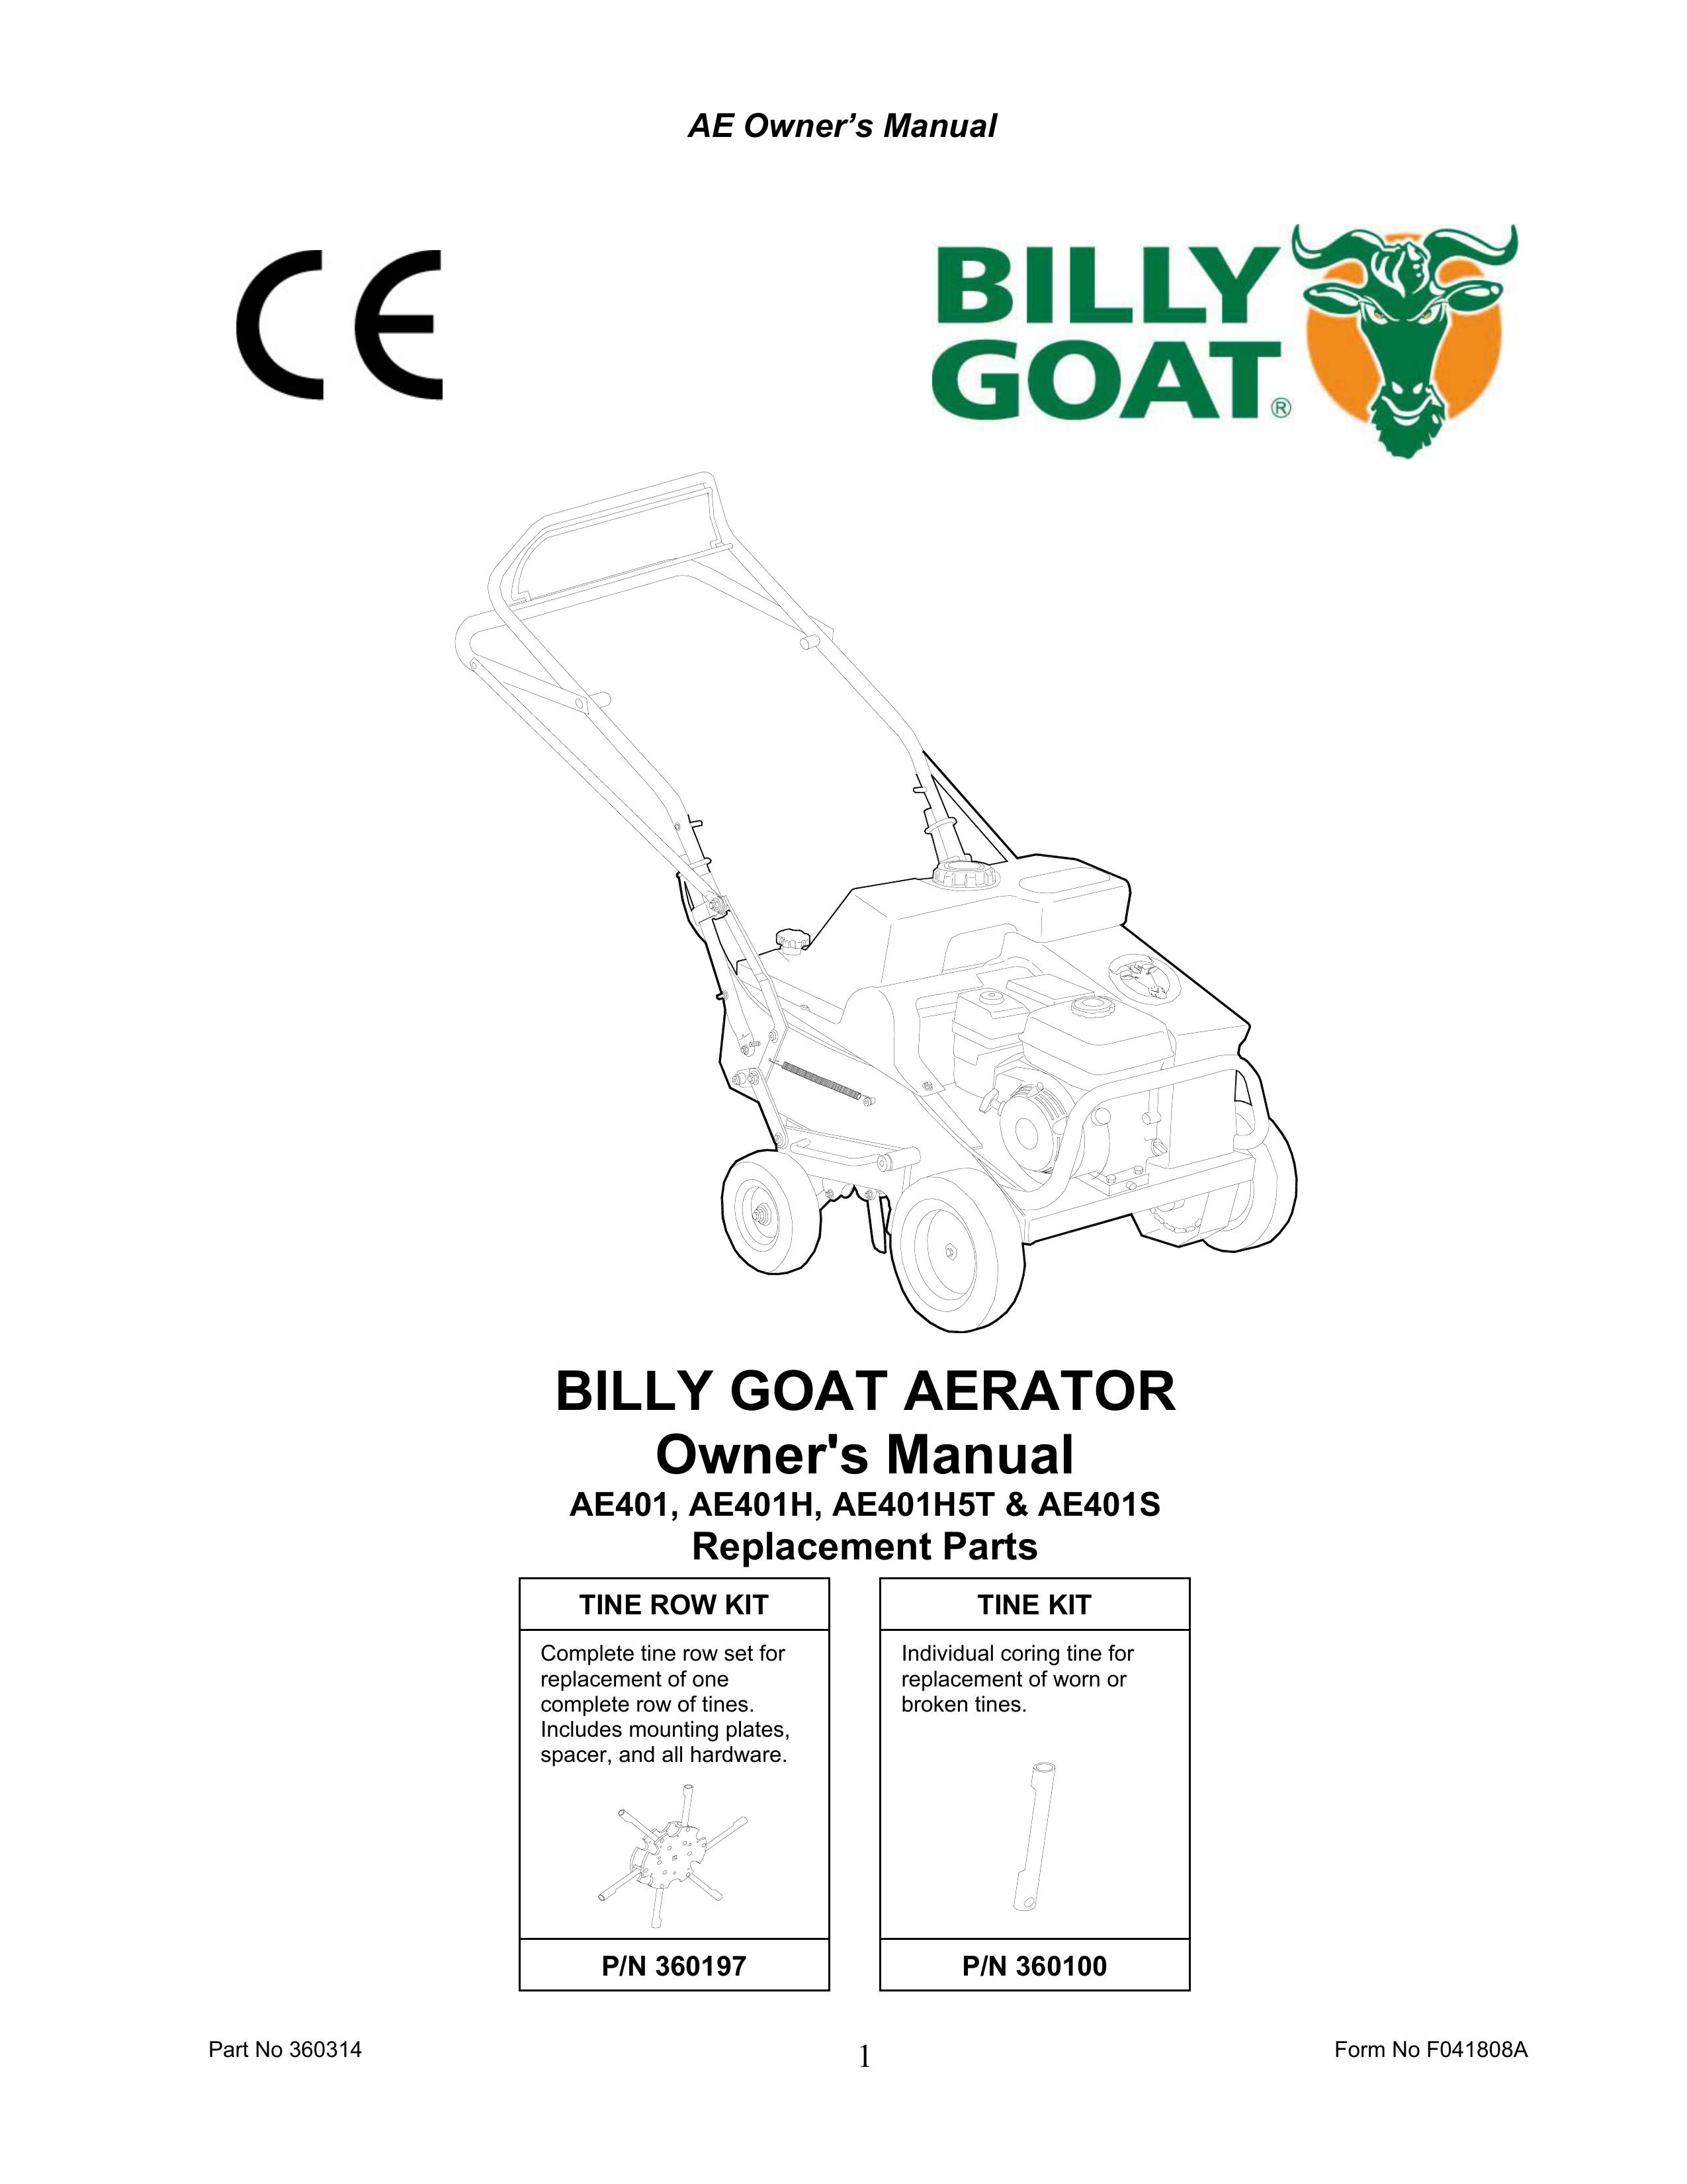 Billy Goat AE401H5T Lawn Aerator User Manual